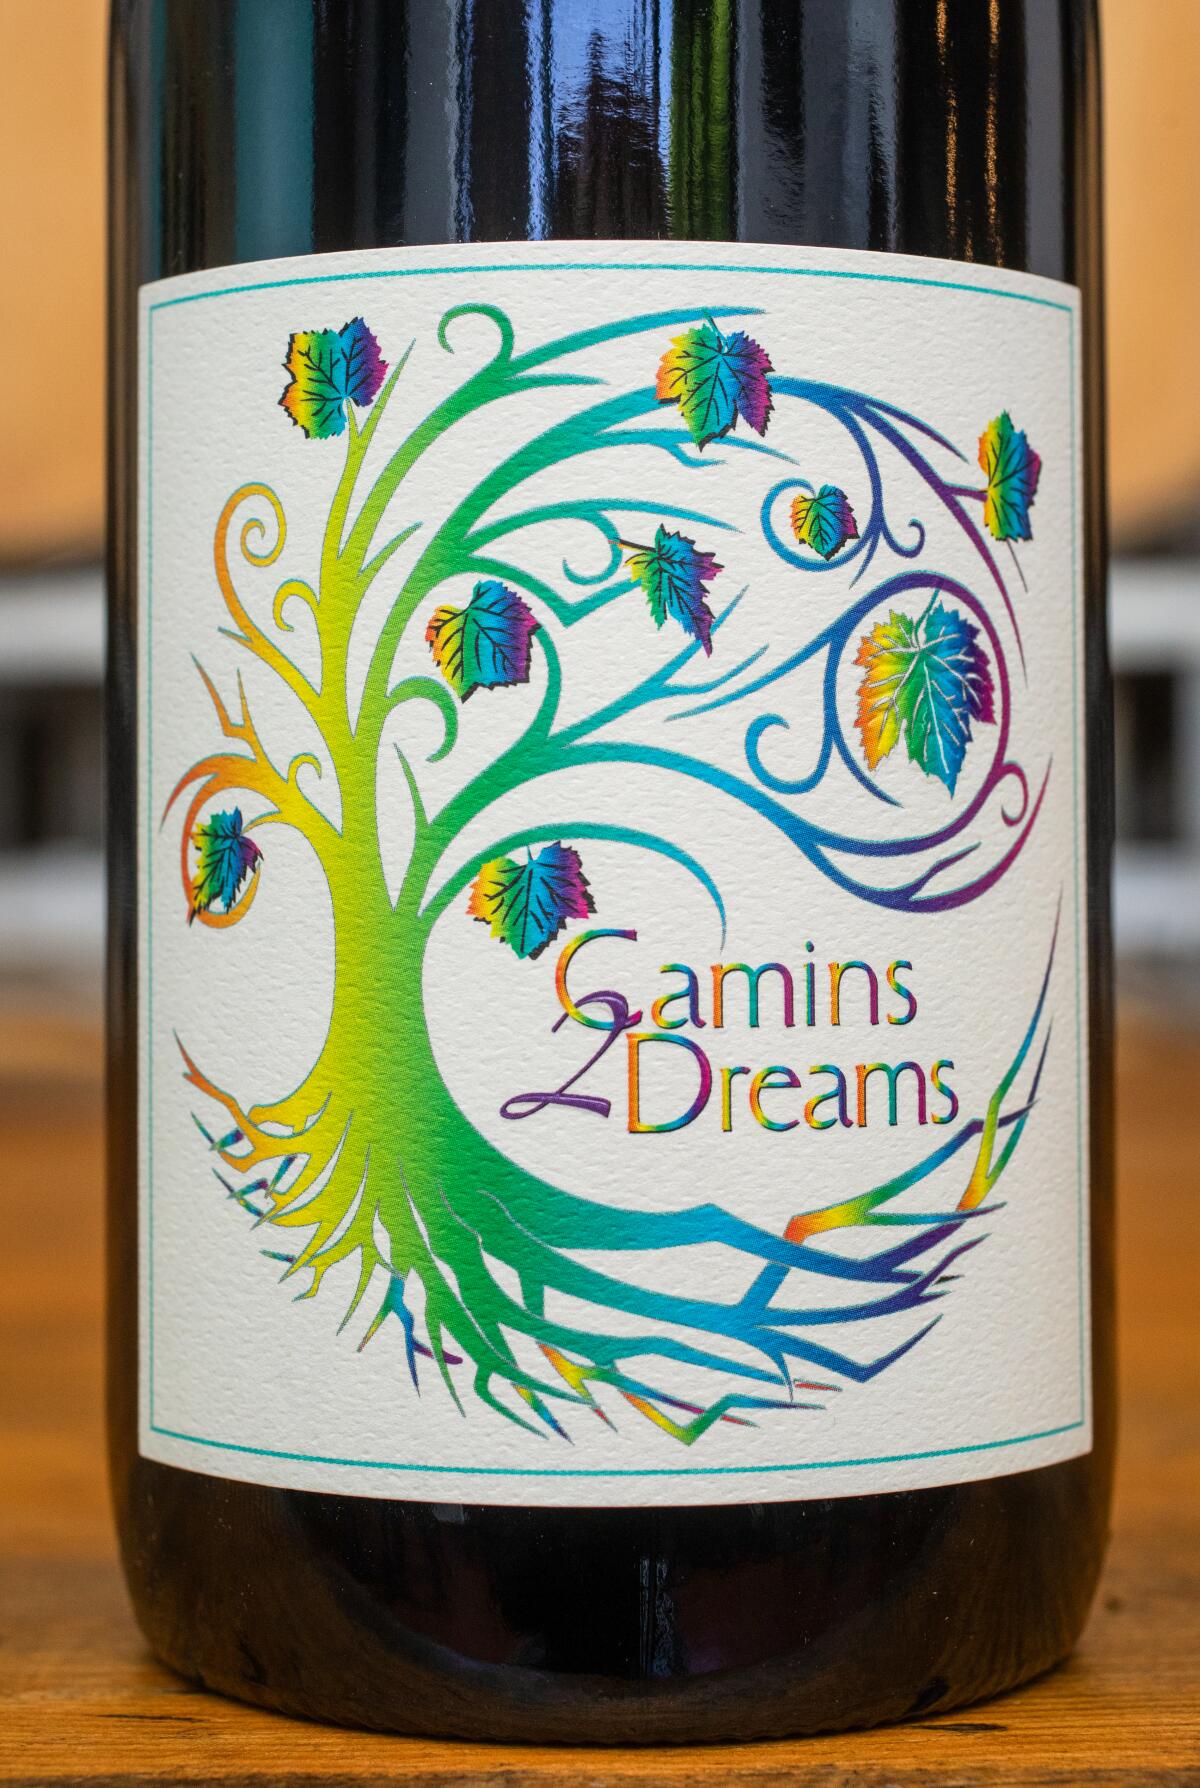 Camins 2 Dreams' Pride-themed wine label. 